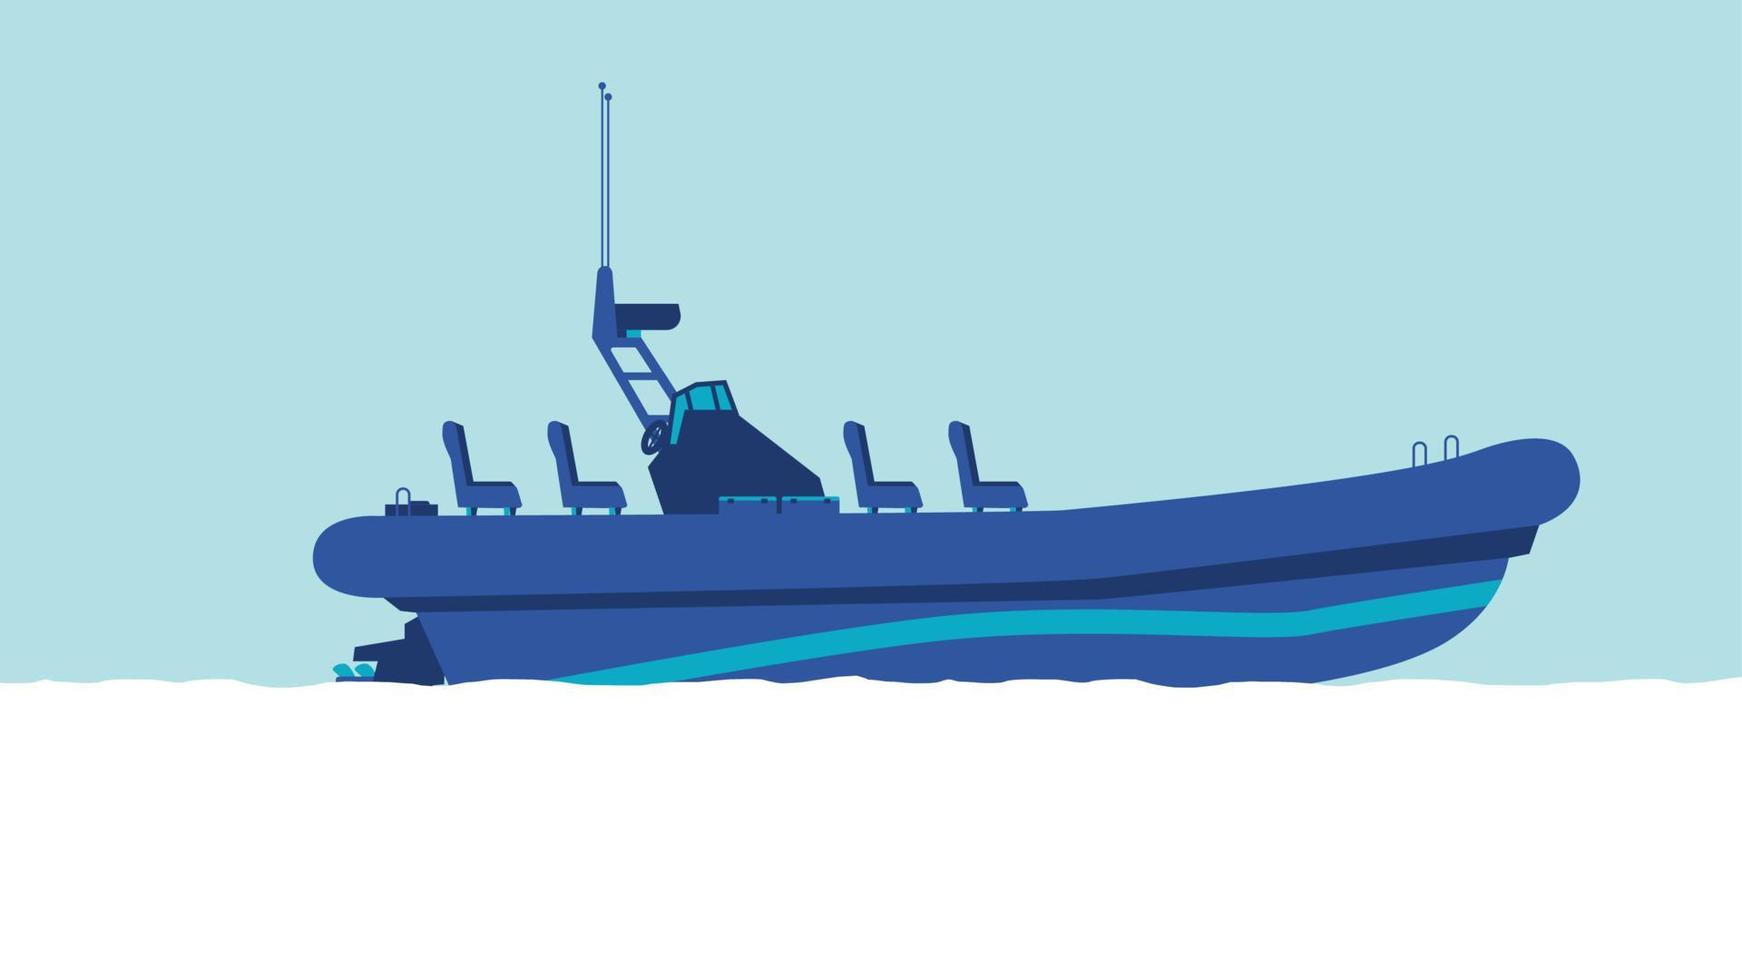 vista lateral plana de dibujos animados del barco inflable rígido vector